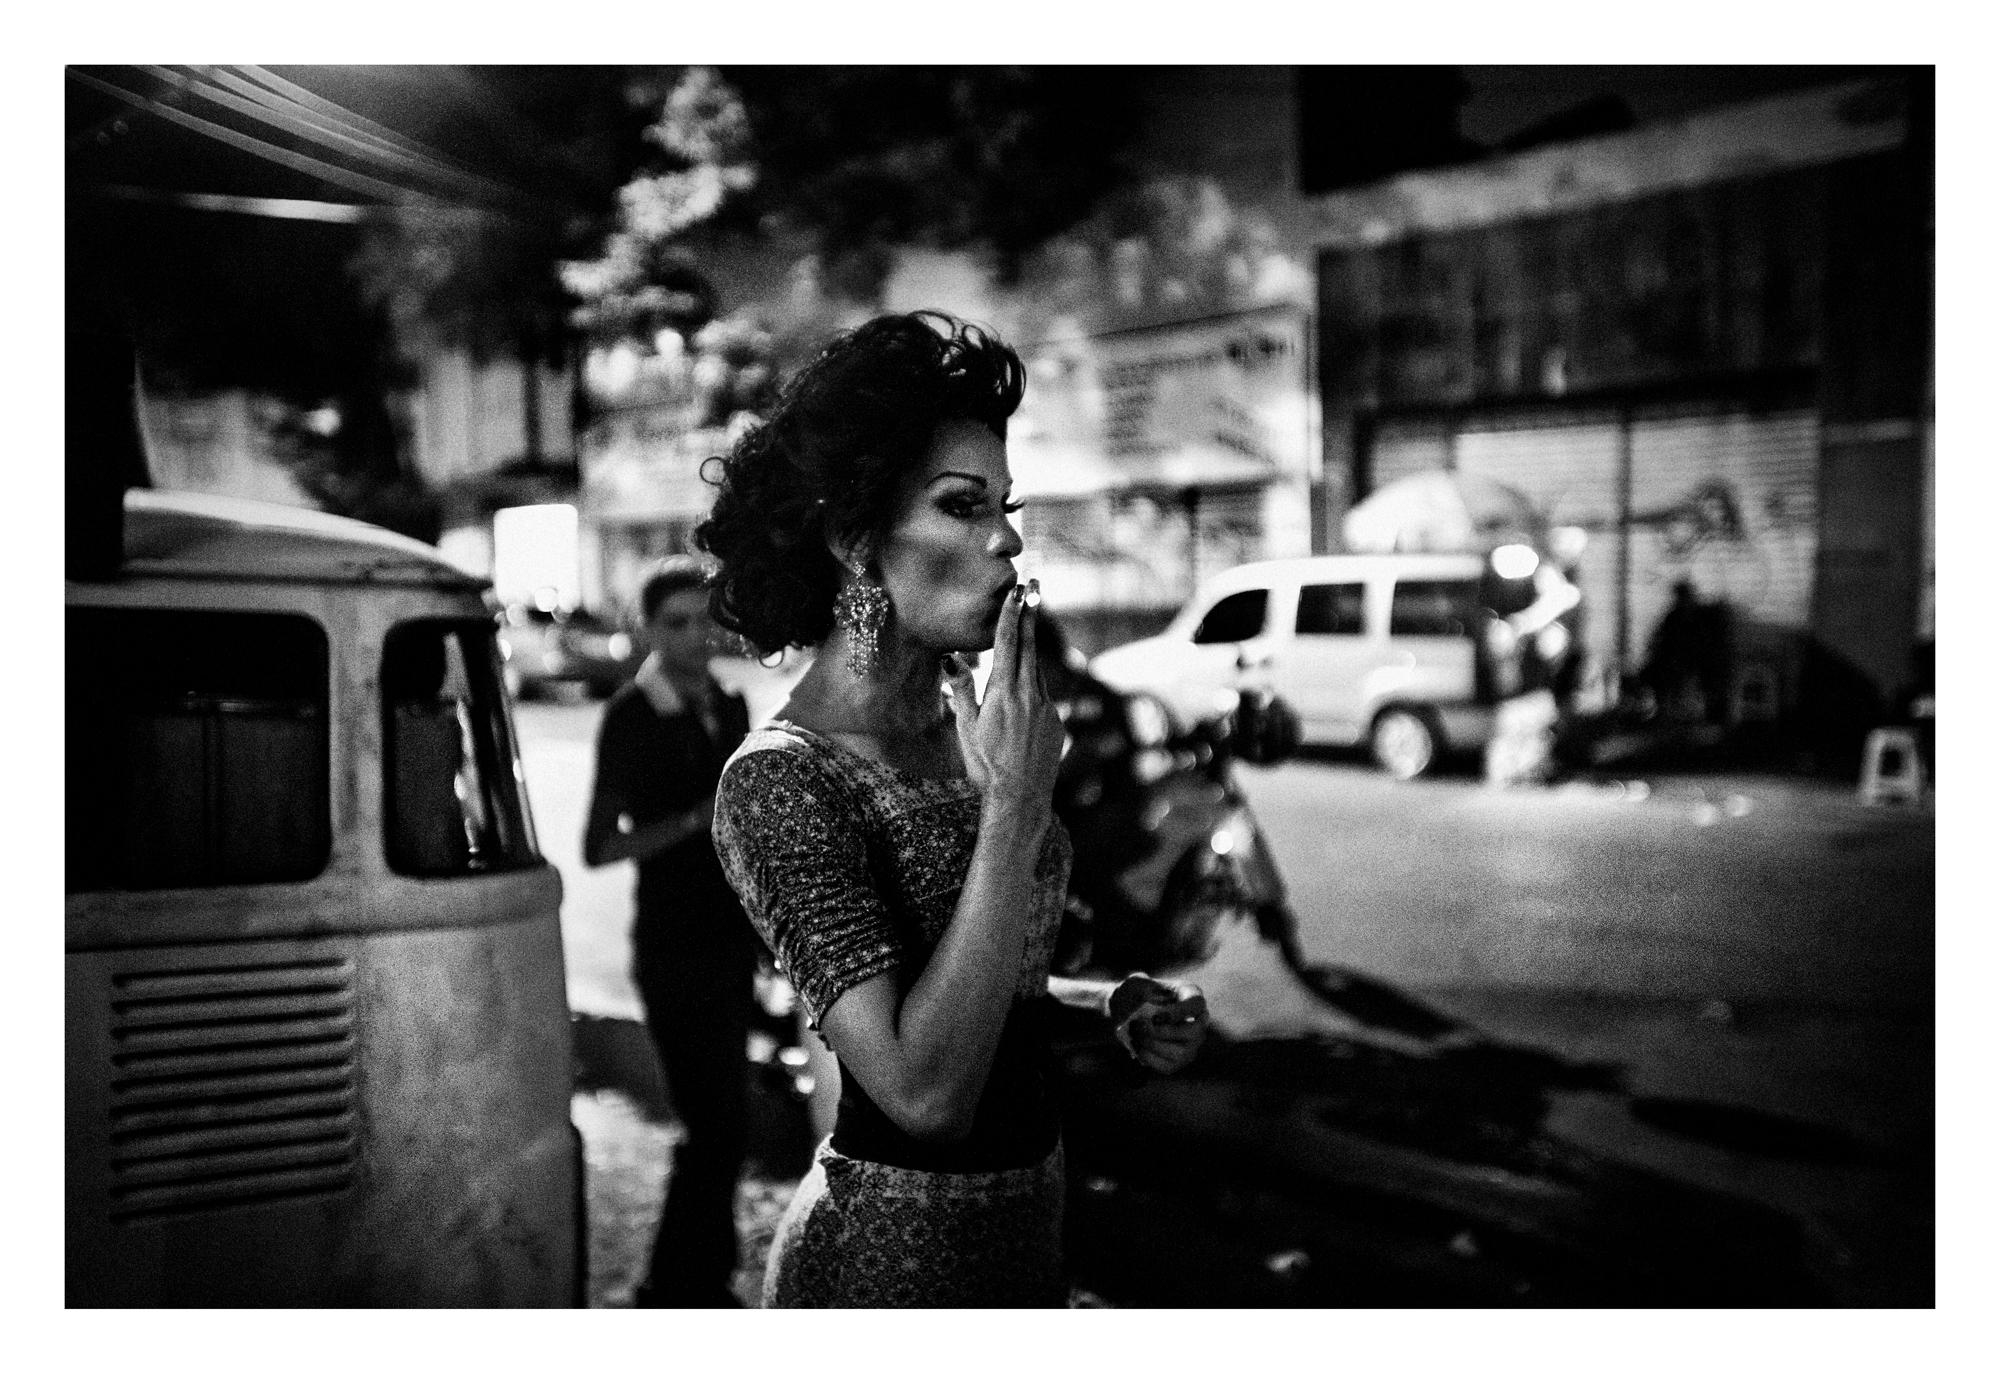 All imperfect things - Fortaleza, Brazil.
April 2012.
Kyara Hilton at the...